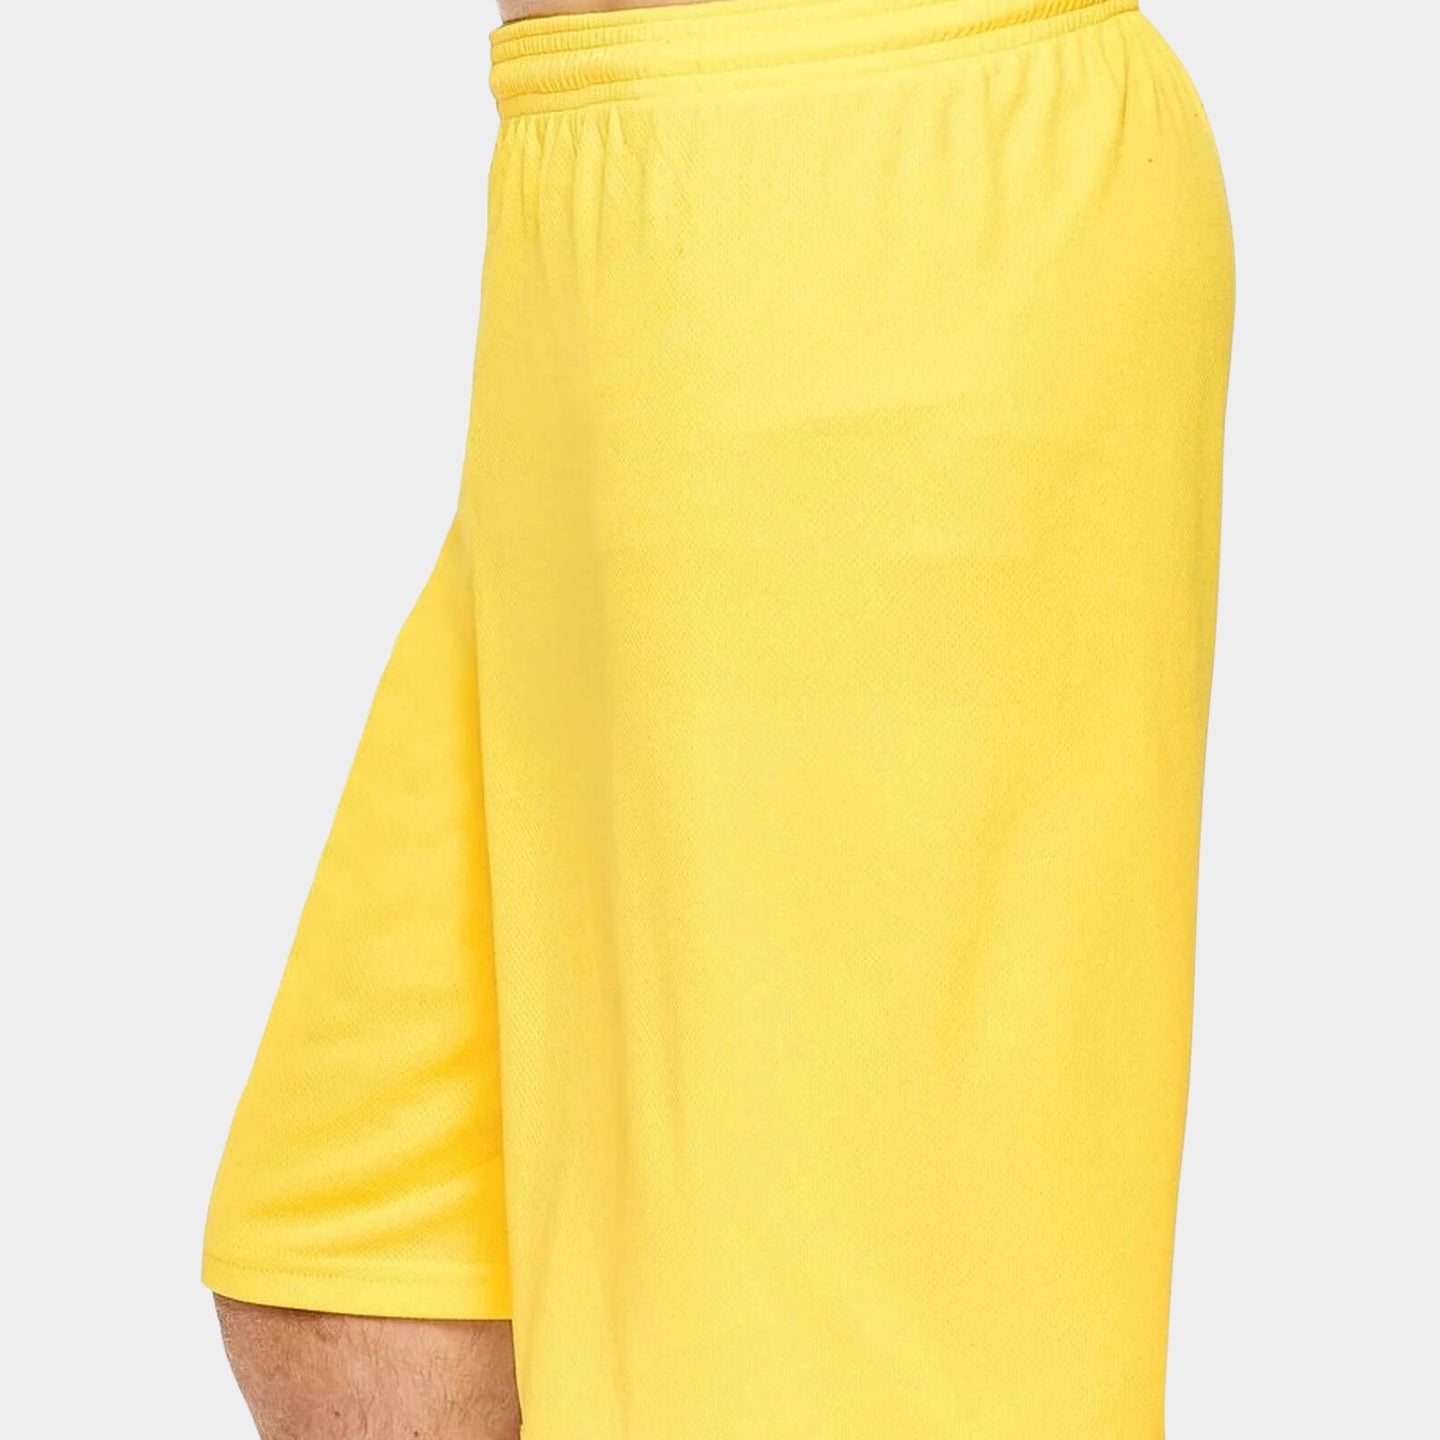 Expert Brand Oxymesh Men's Performance Training Shorts, S, Yellow A1